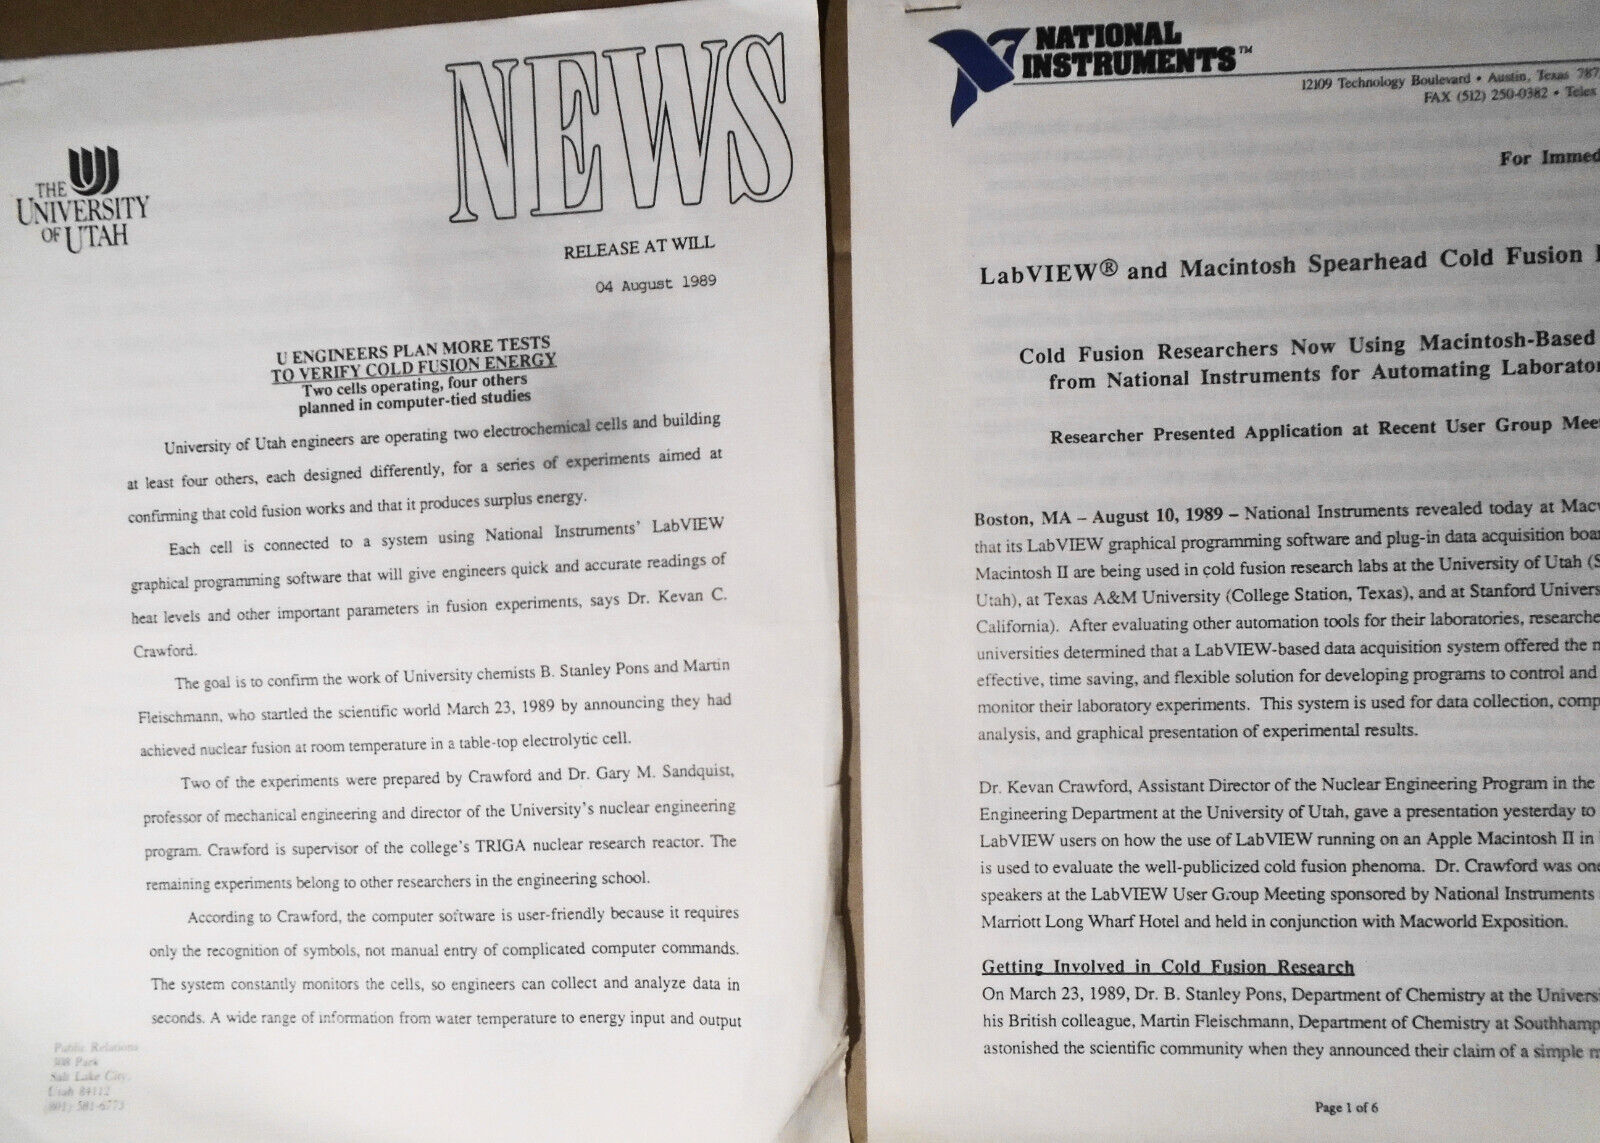 1989 Cold Fusion Resarch at University of Utah - 2 original Press releases